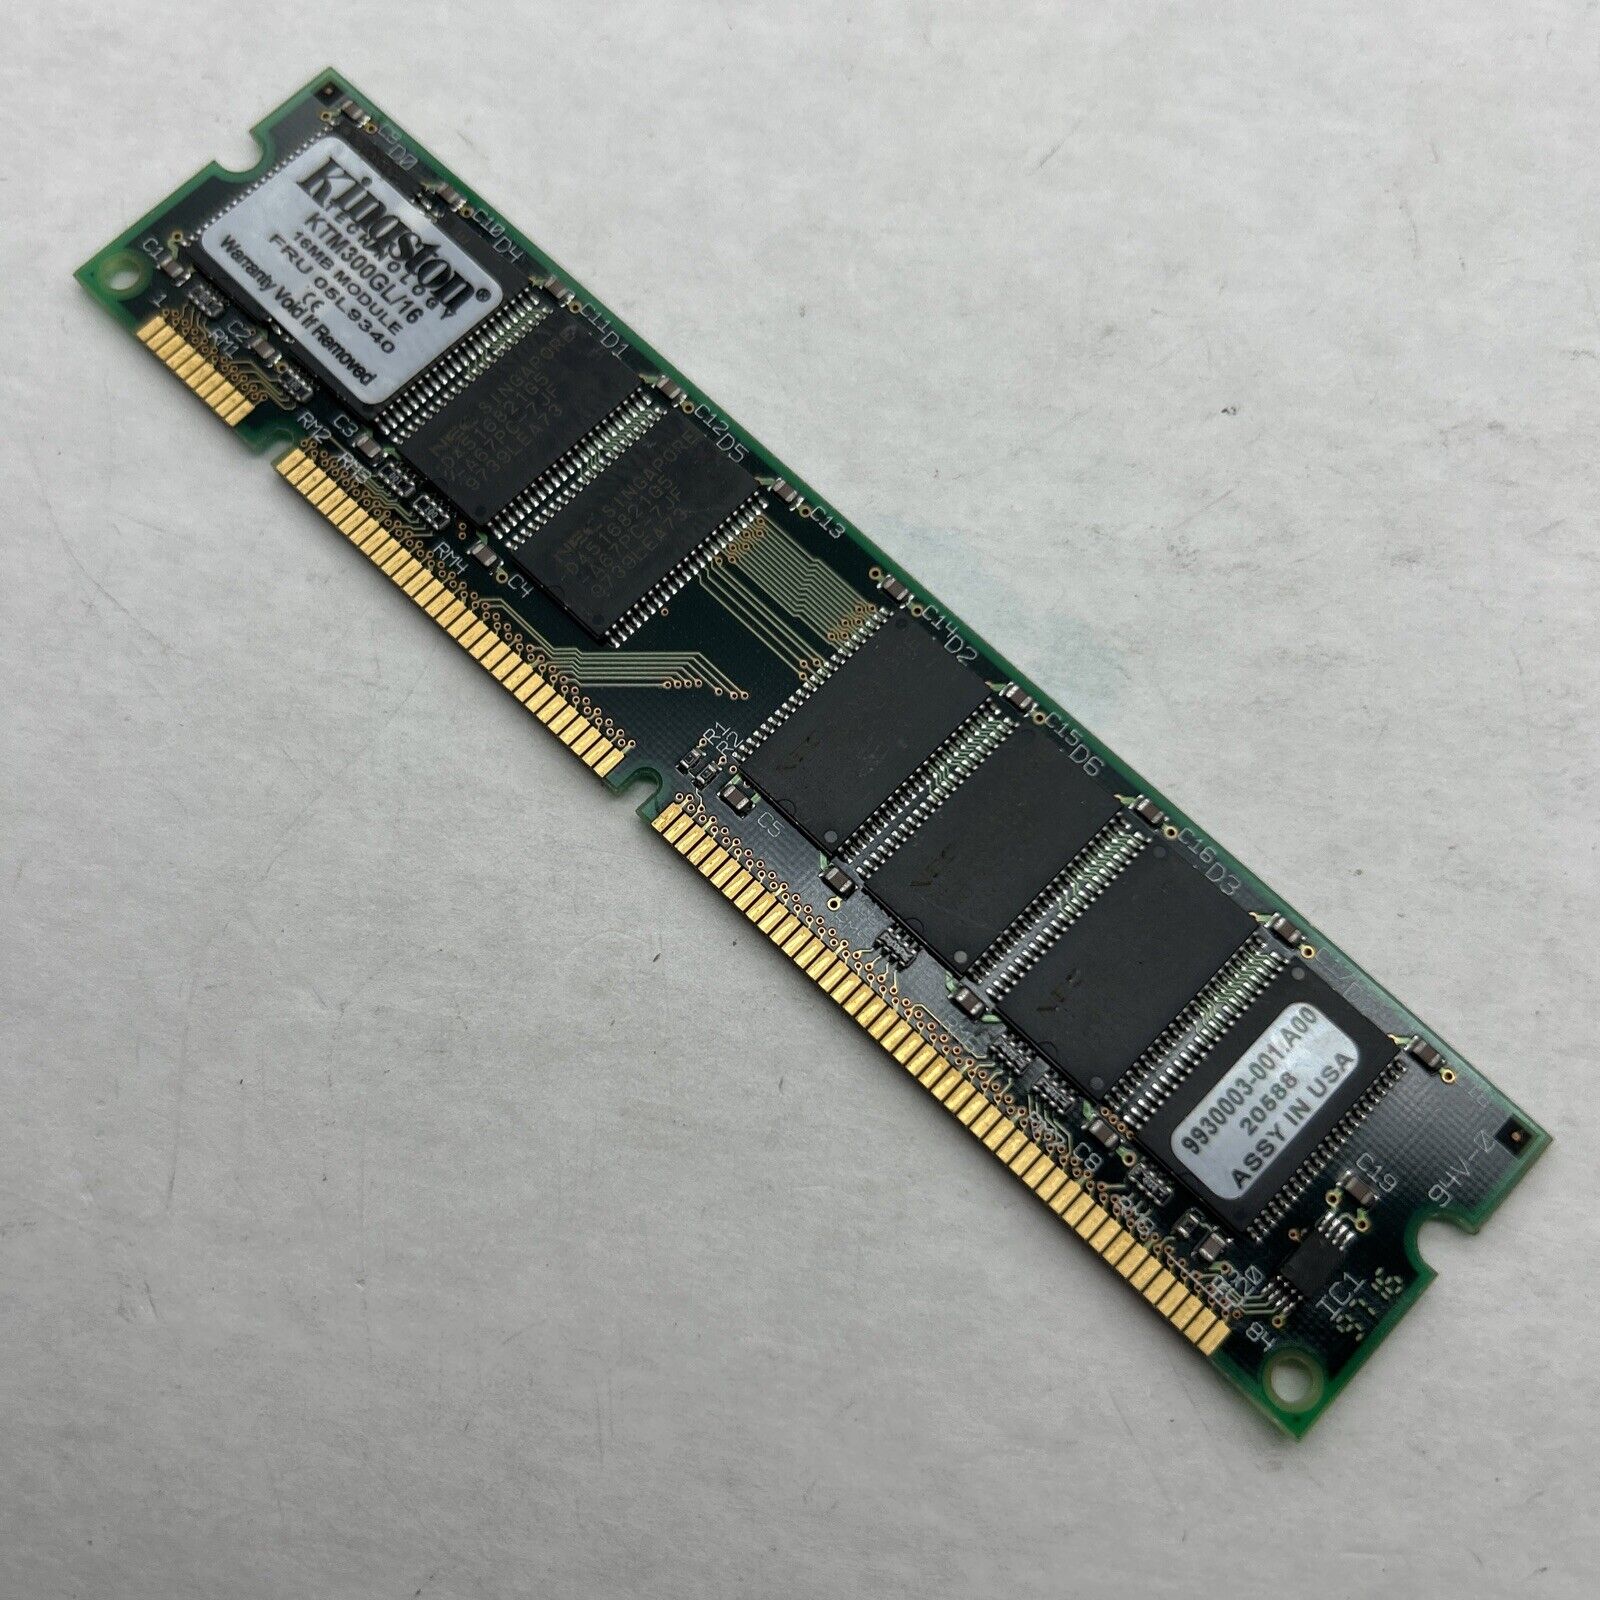 Kingston 16MB 168-Pin SDRAM DIMM PC66 Memory 2x64 IBM KTM-300GL/16 PC-66 Vintage